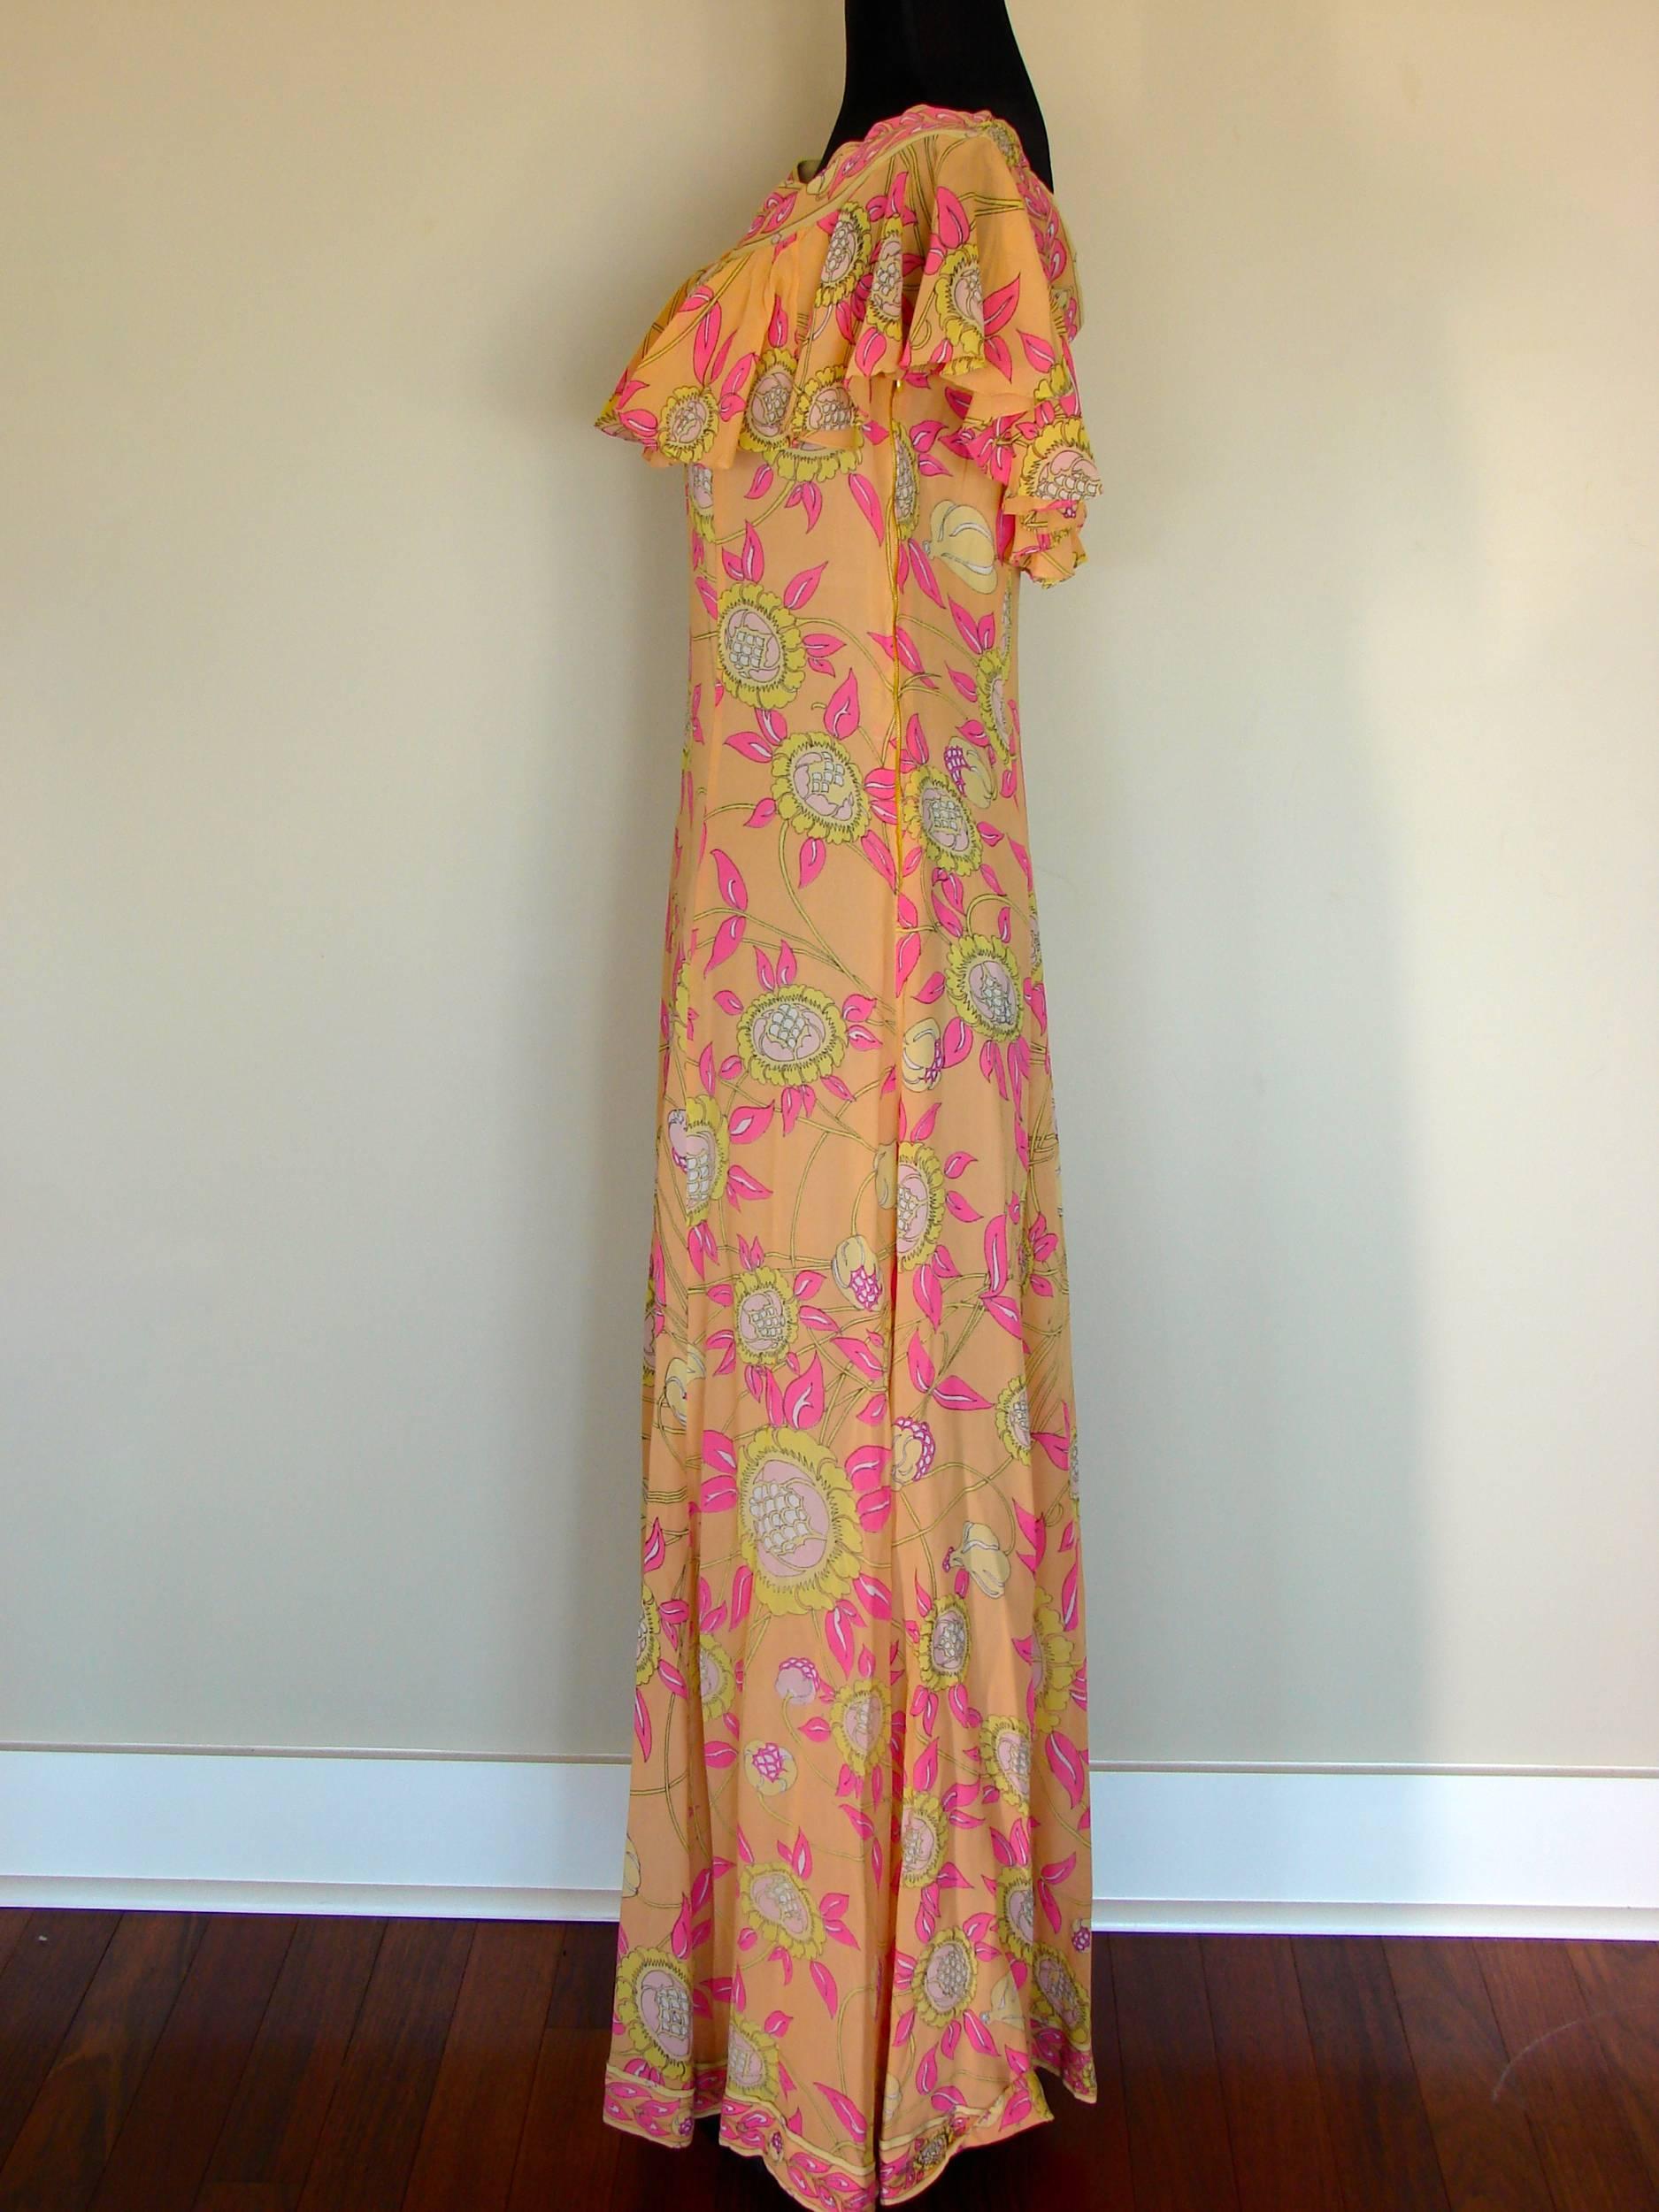 Women's Emilio Pucci Silk Chiffon Ruffle Maxi Dress Bright Sunflower Print Deadstock 70s